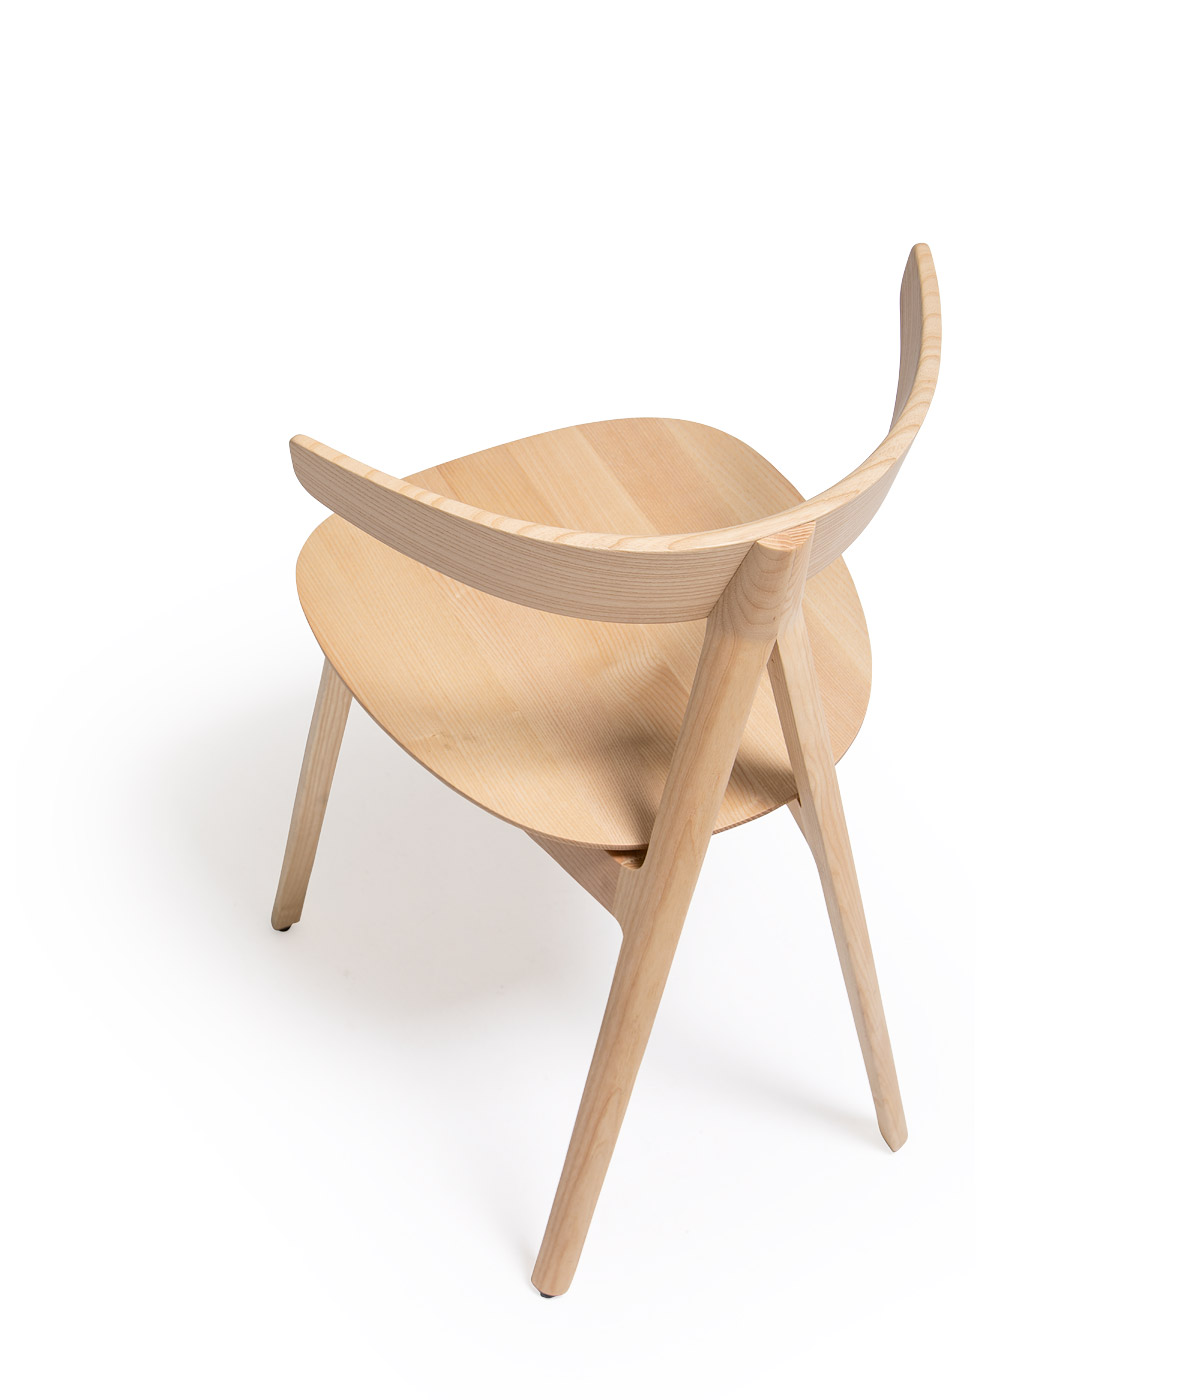 Compass chair with wooden legs - Vergés